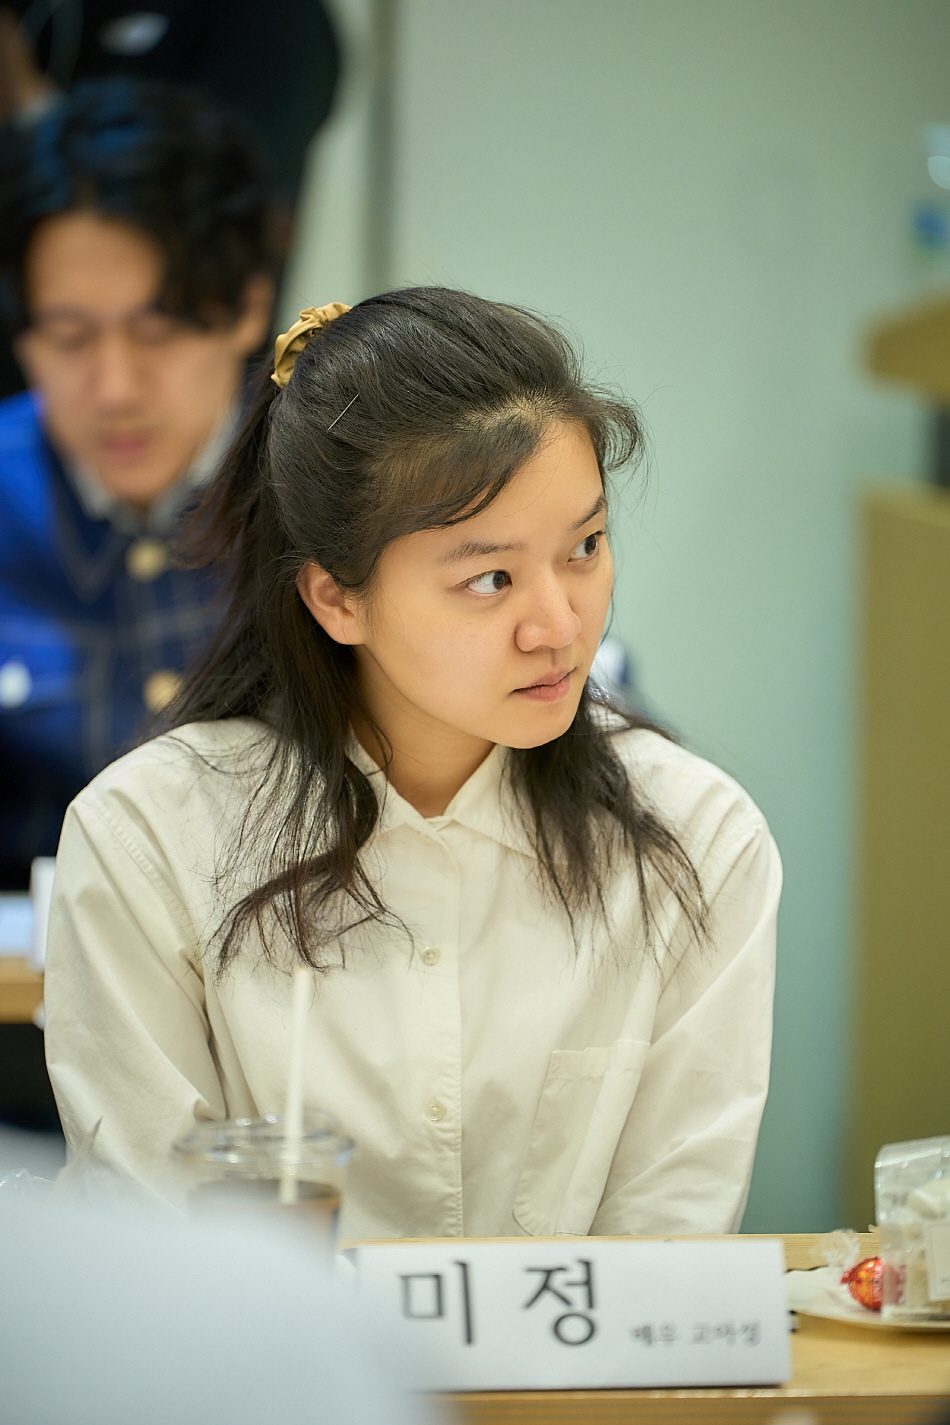 Go Ah Sung, Byun Yo Han, And Moon Sang Min Impress At Script Reading For Upcoming Romance Film